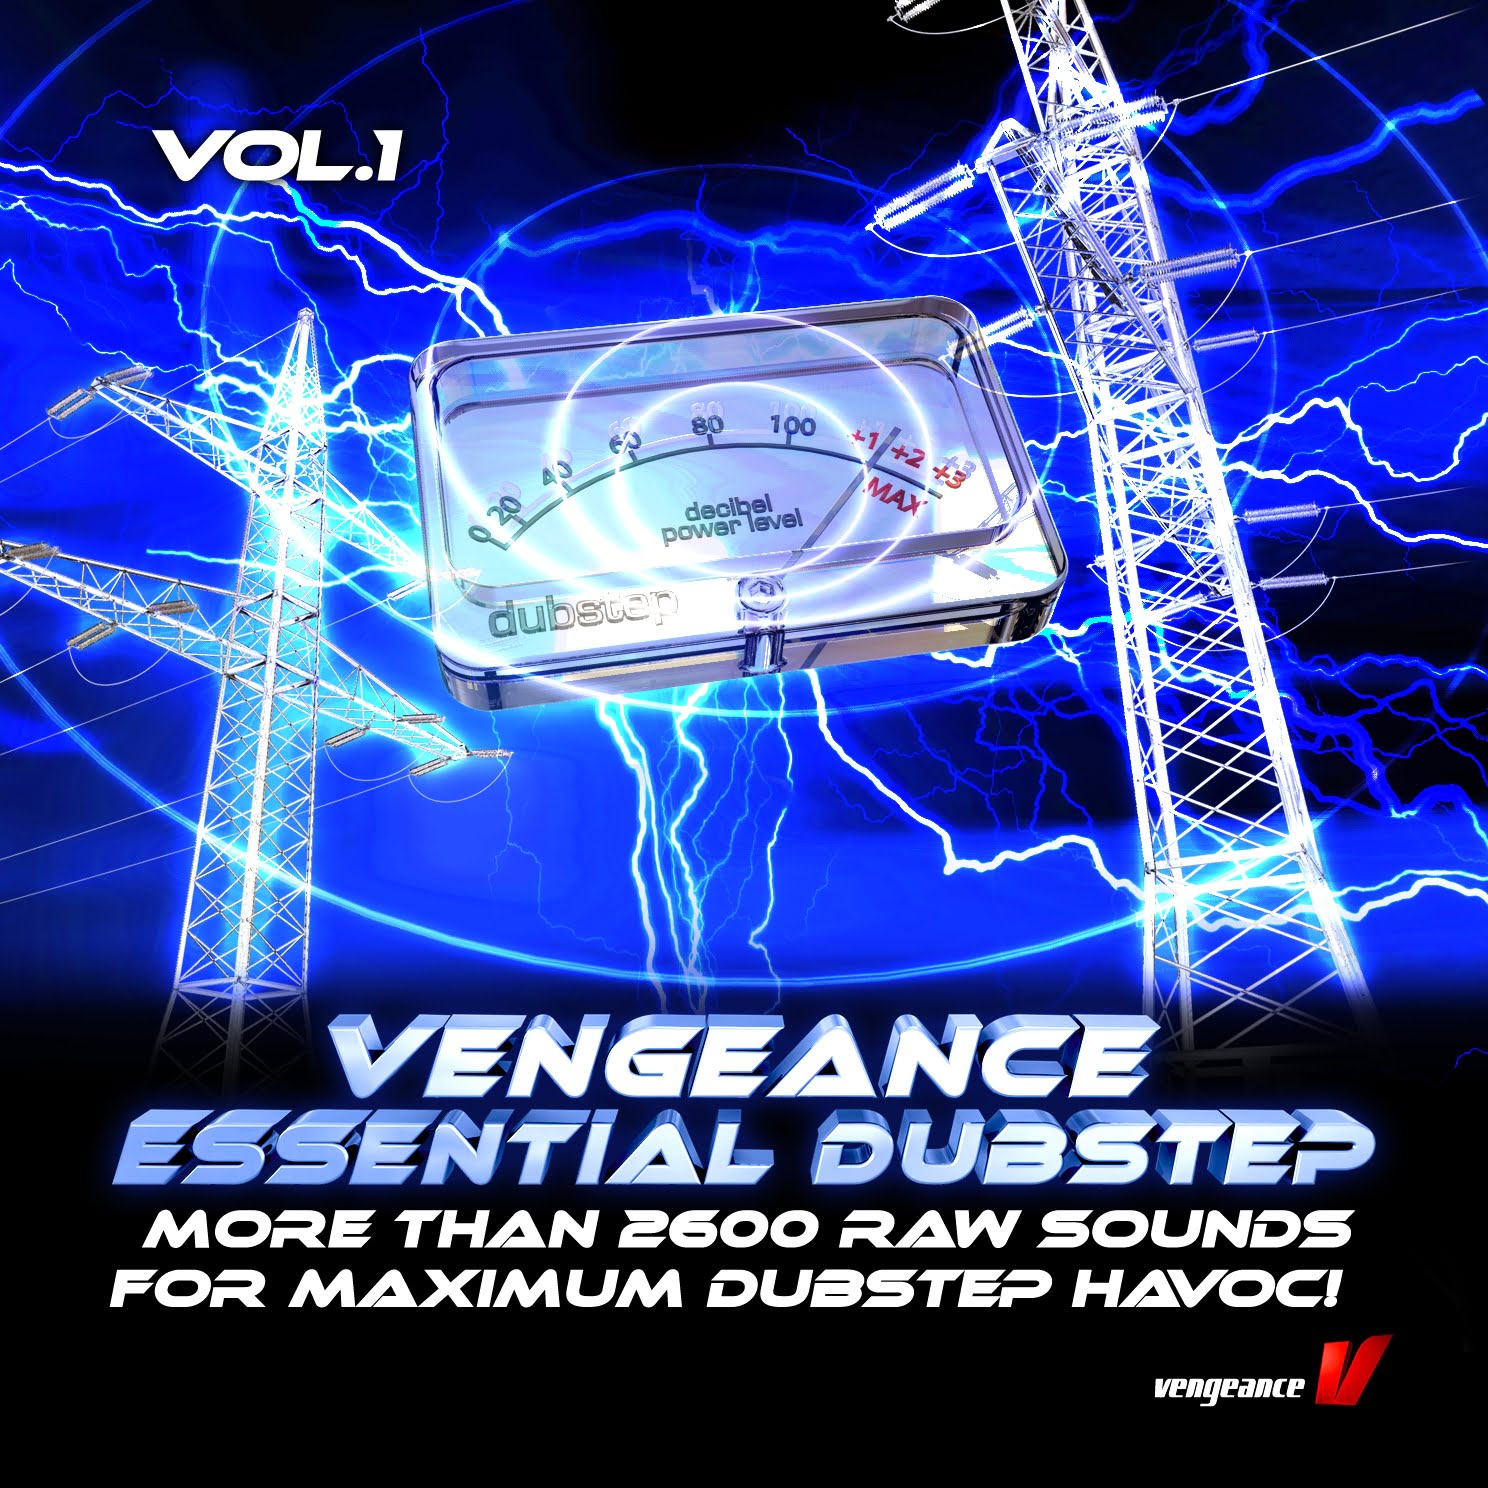 Vengeance essential club sounds vol. 3 fl studio free download utorrent